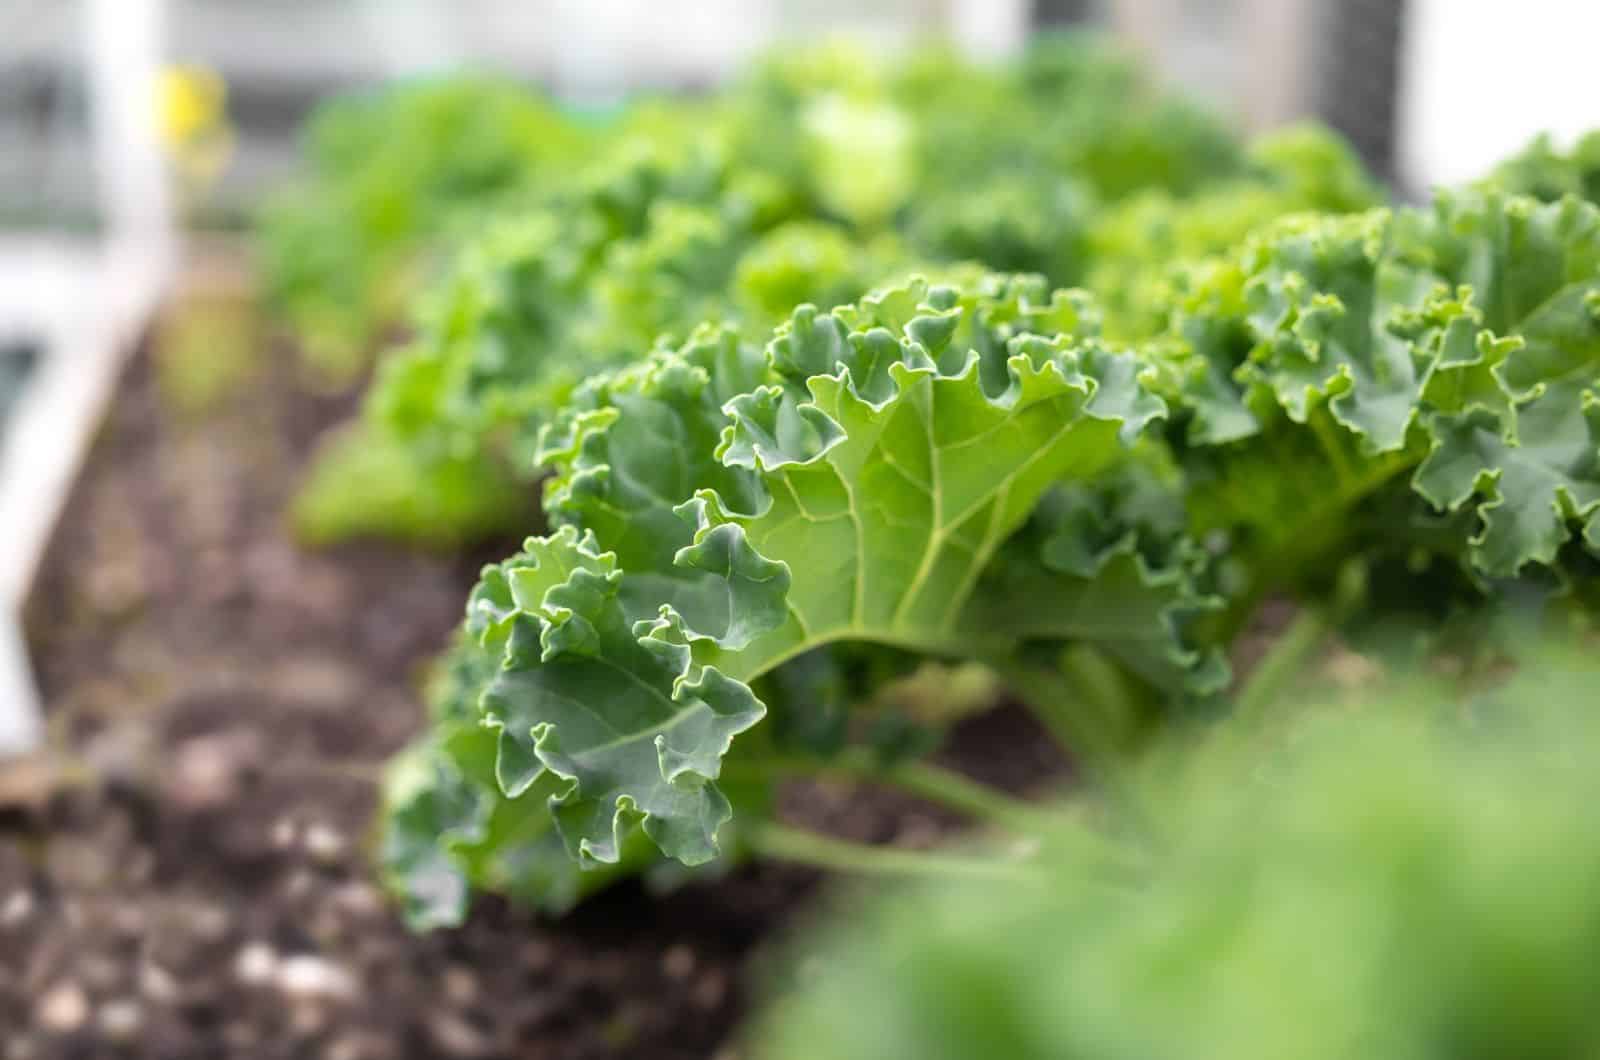 Kale growing in garden